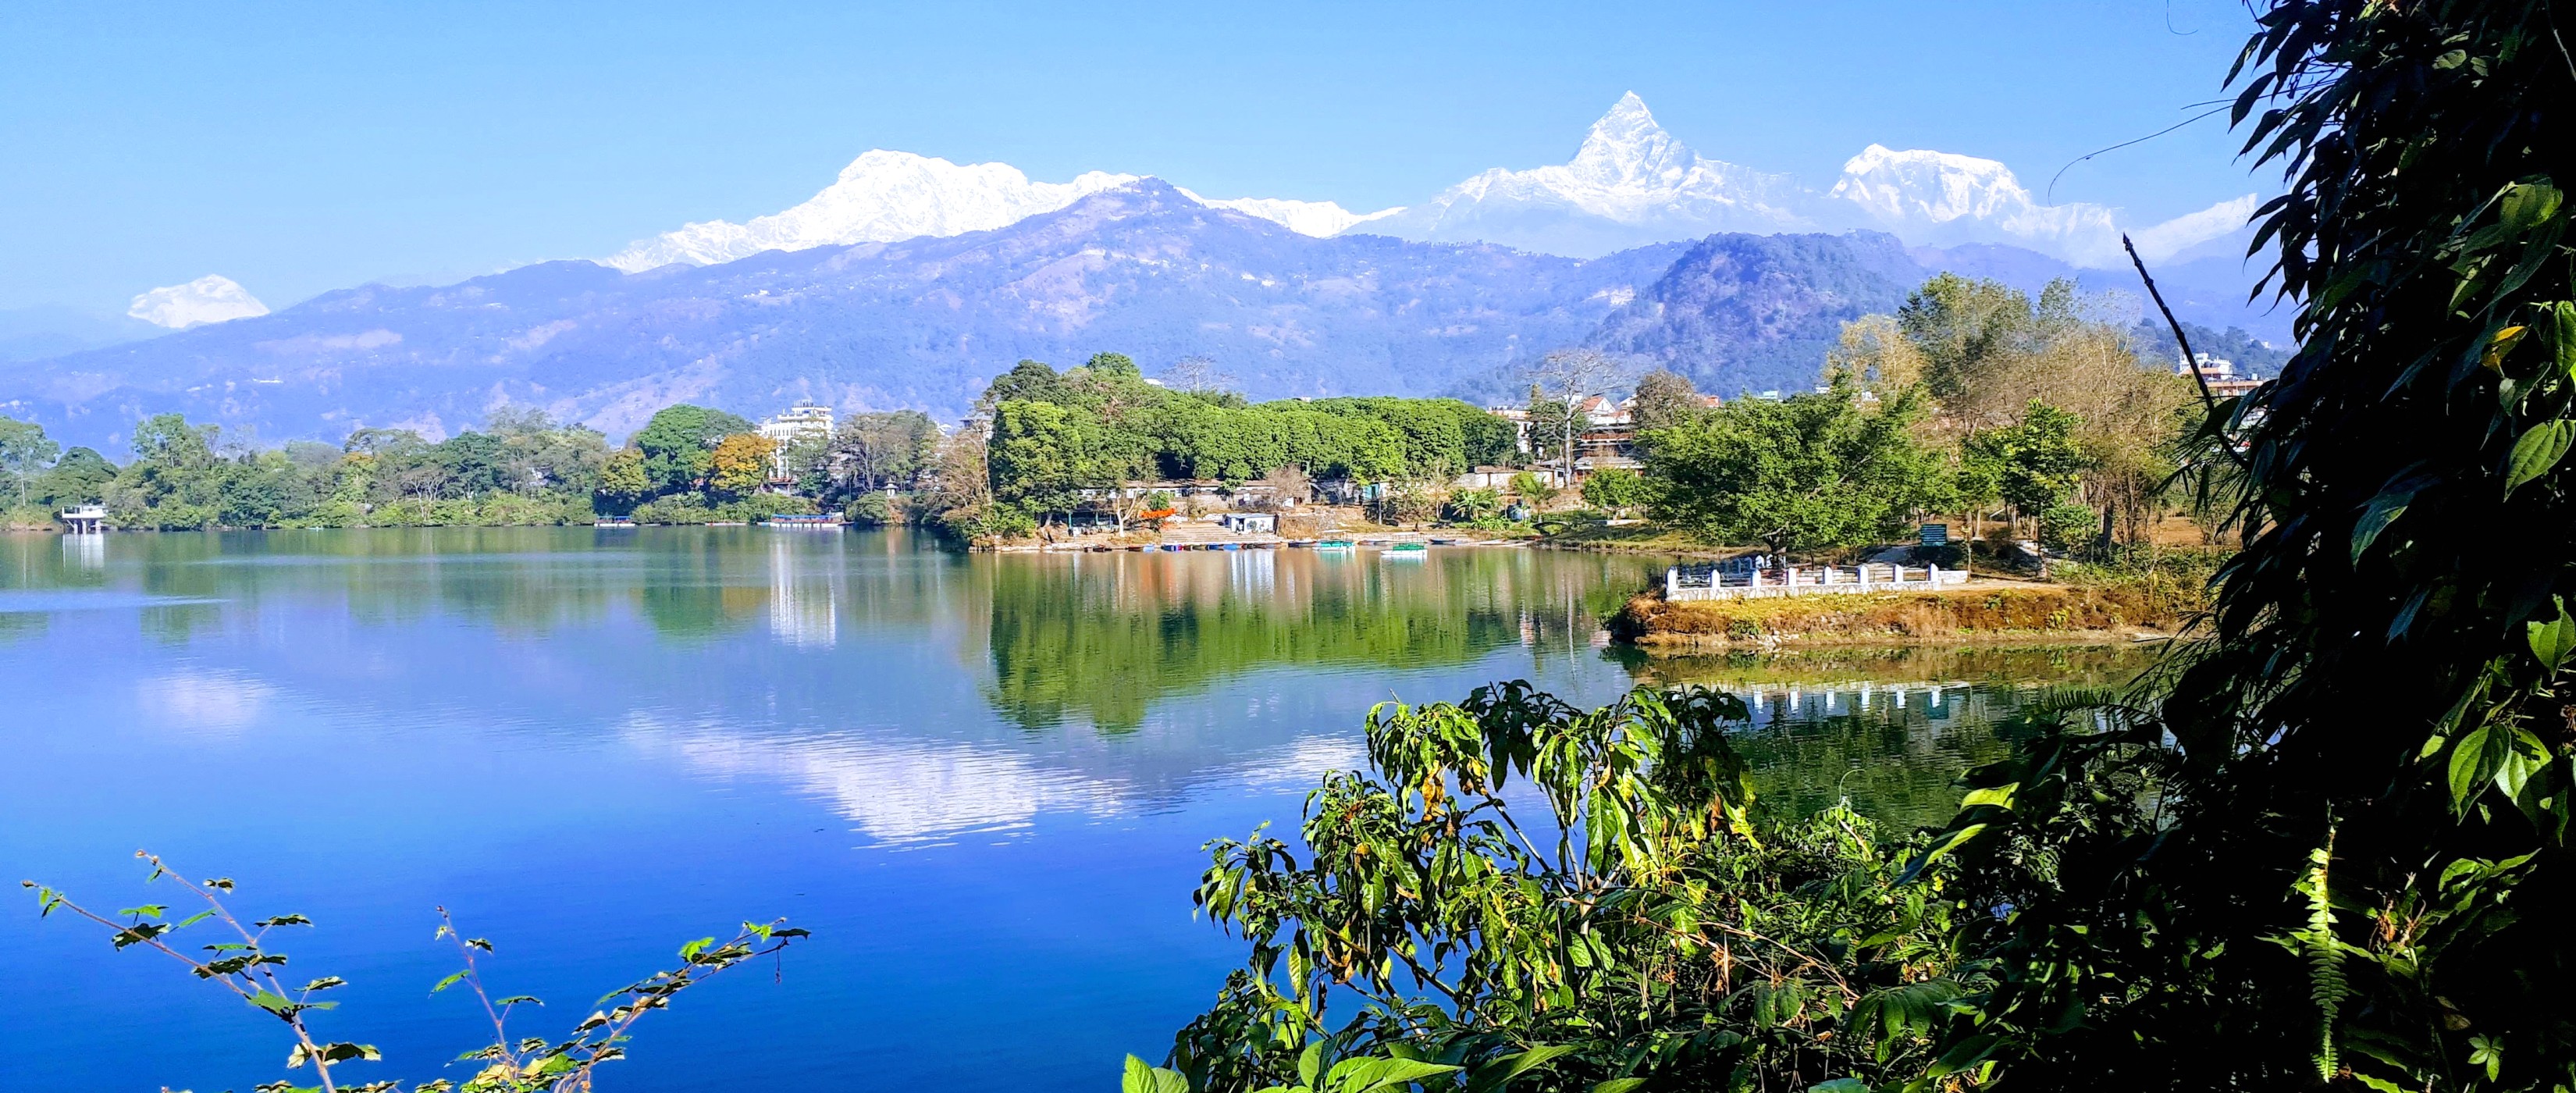 Nepal Begegnungsreise - Lupe Reisen